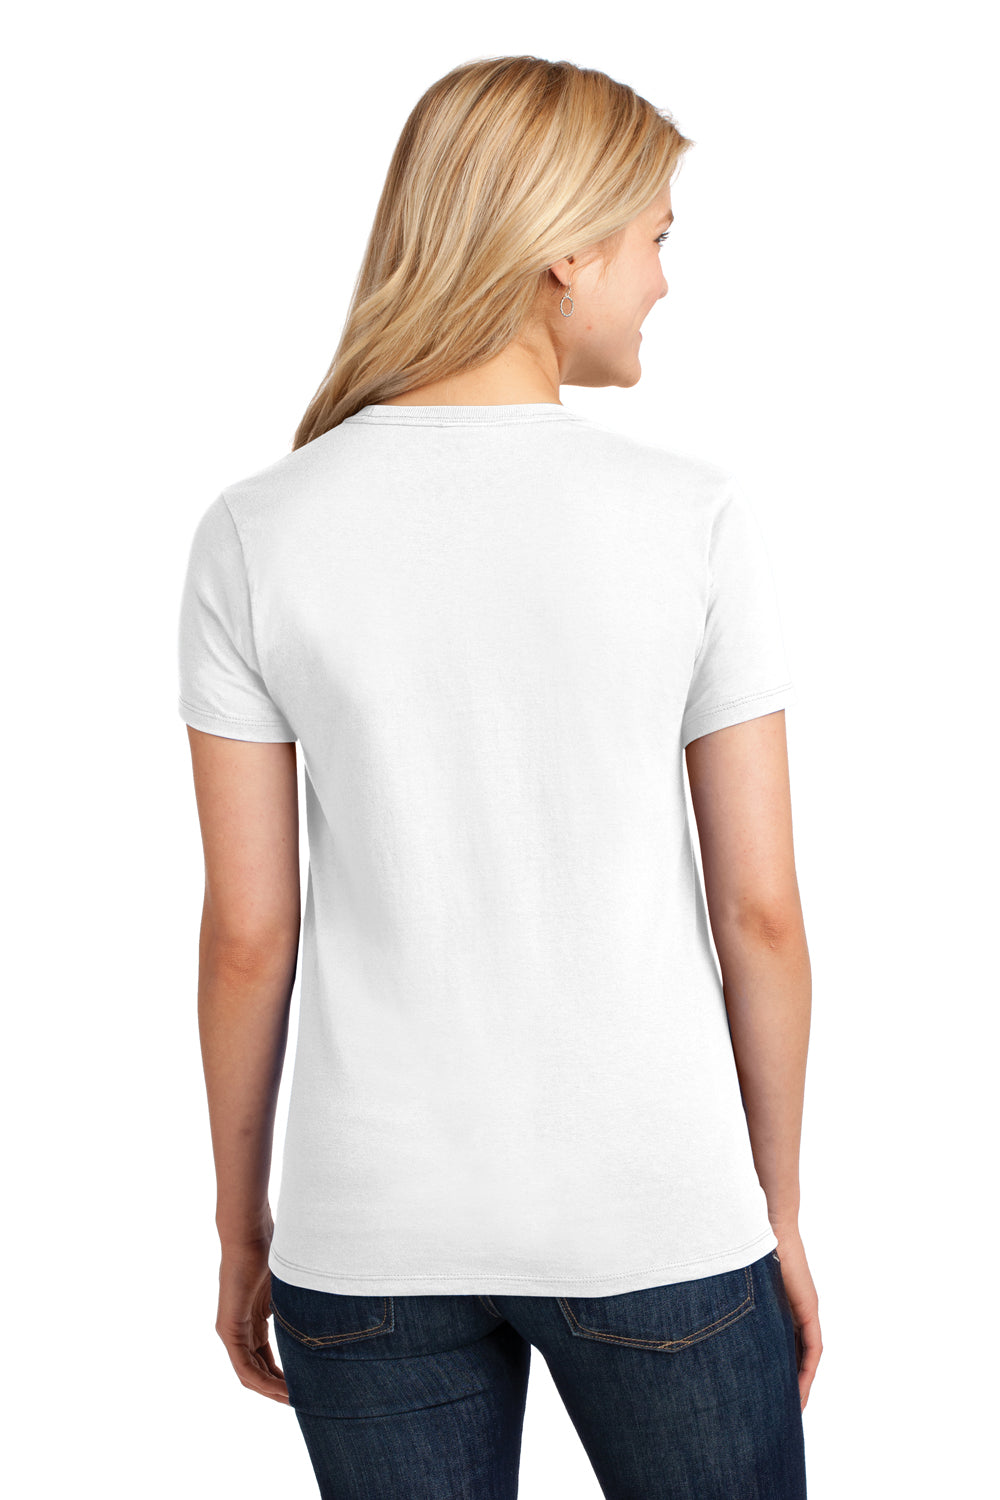 Port & Company LPC54 Womens Core Short Sleeve Crewneck T-Shirt White Back